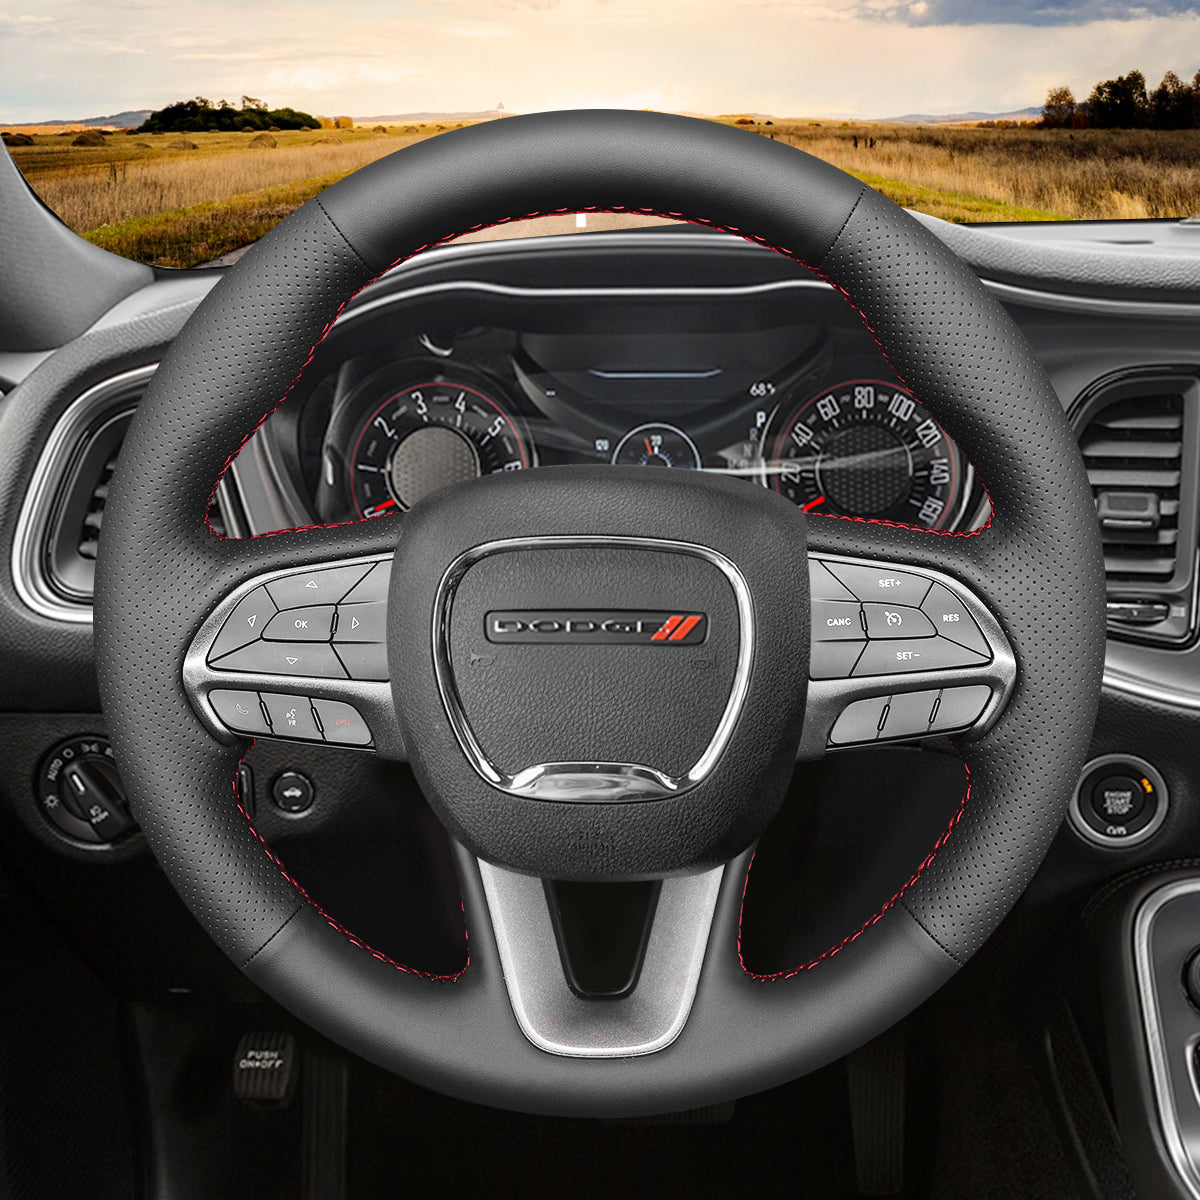 MEWANT Hand Stitch Leather Suede Carbon Fiber Car Steering Wheel Cover for Dodge Challenger 2015-2021 / Dodge Charger 2015-2021/ Dodge Durango 2018-2021